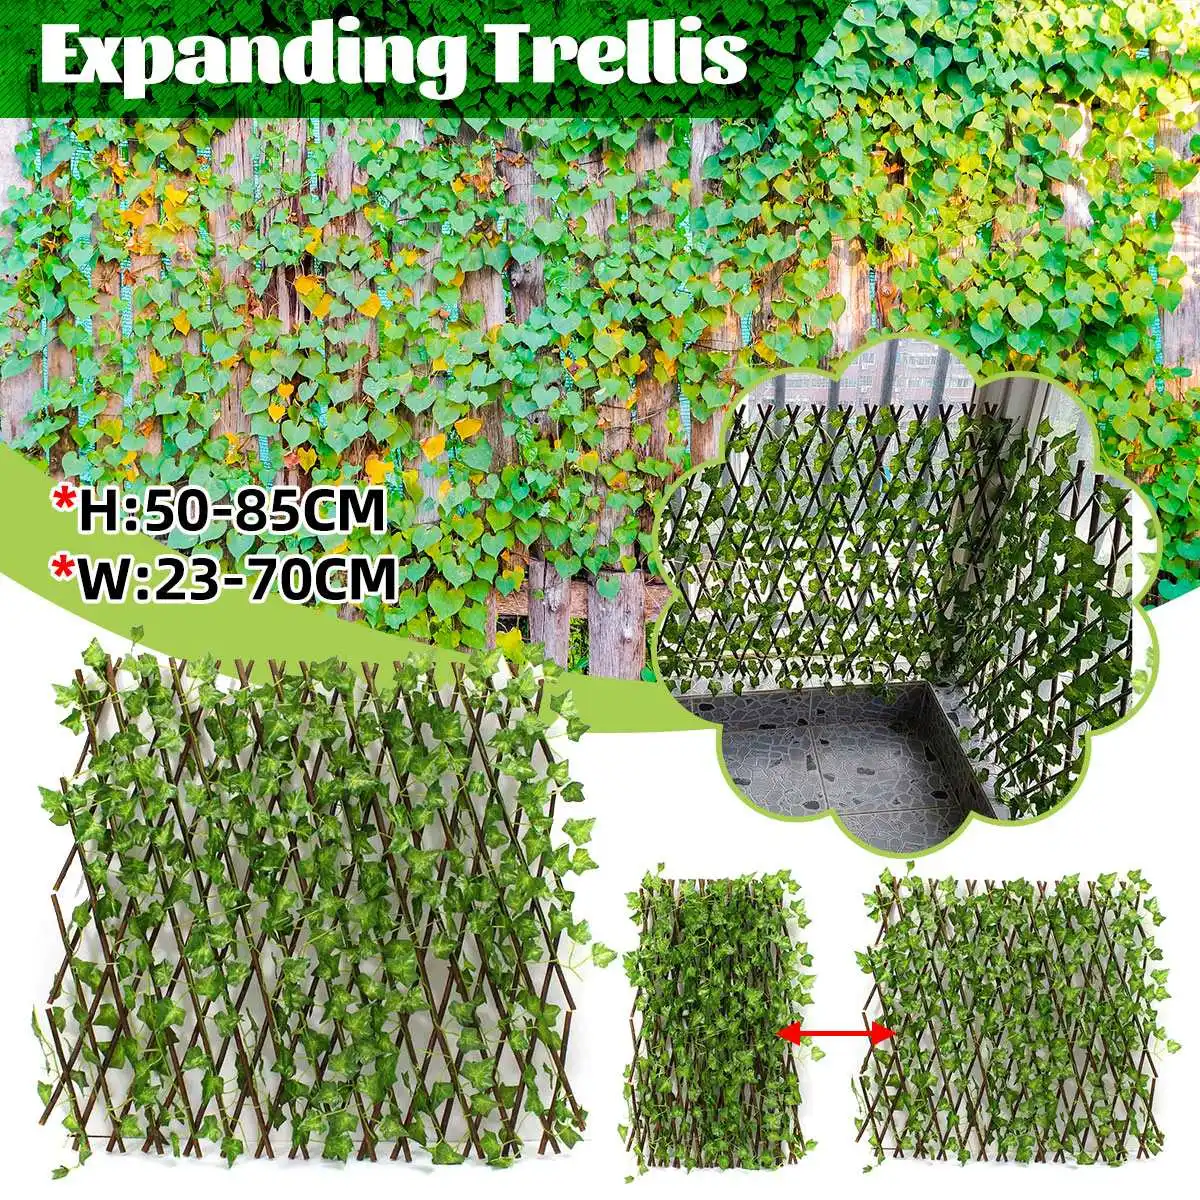 

Climbing Frame Gardening Plant Decor Retractable Artificial Garden Trellis Fence Expandable Faux Ivy Privacy Fence Wood Vines